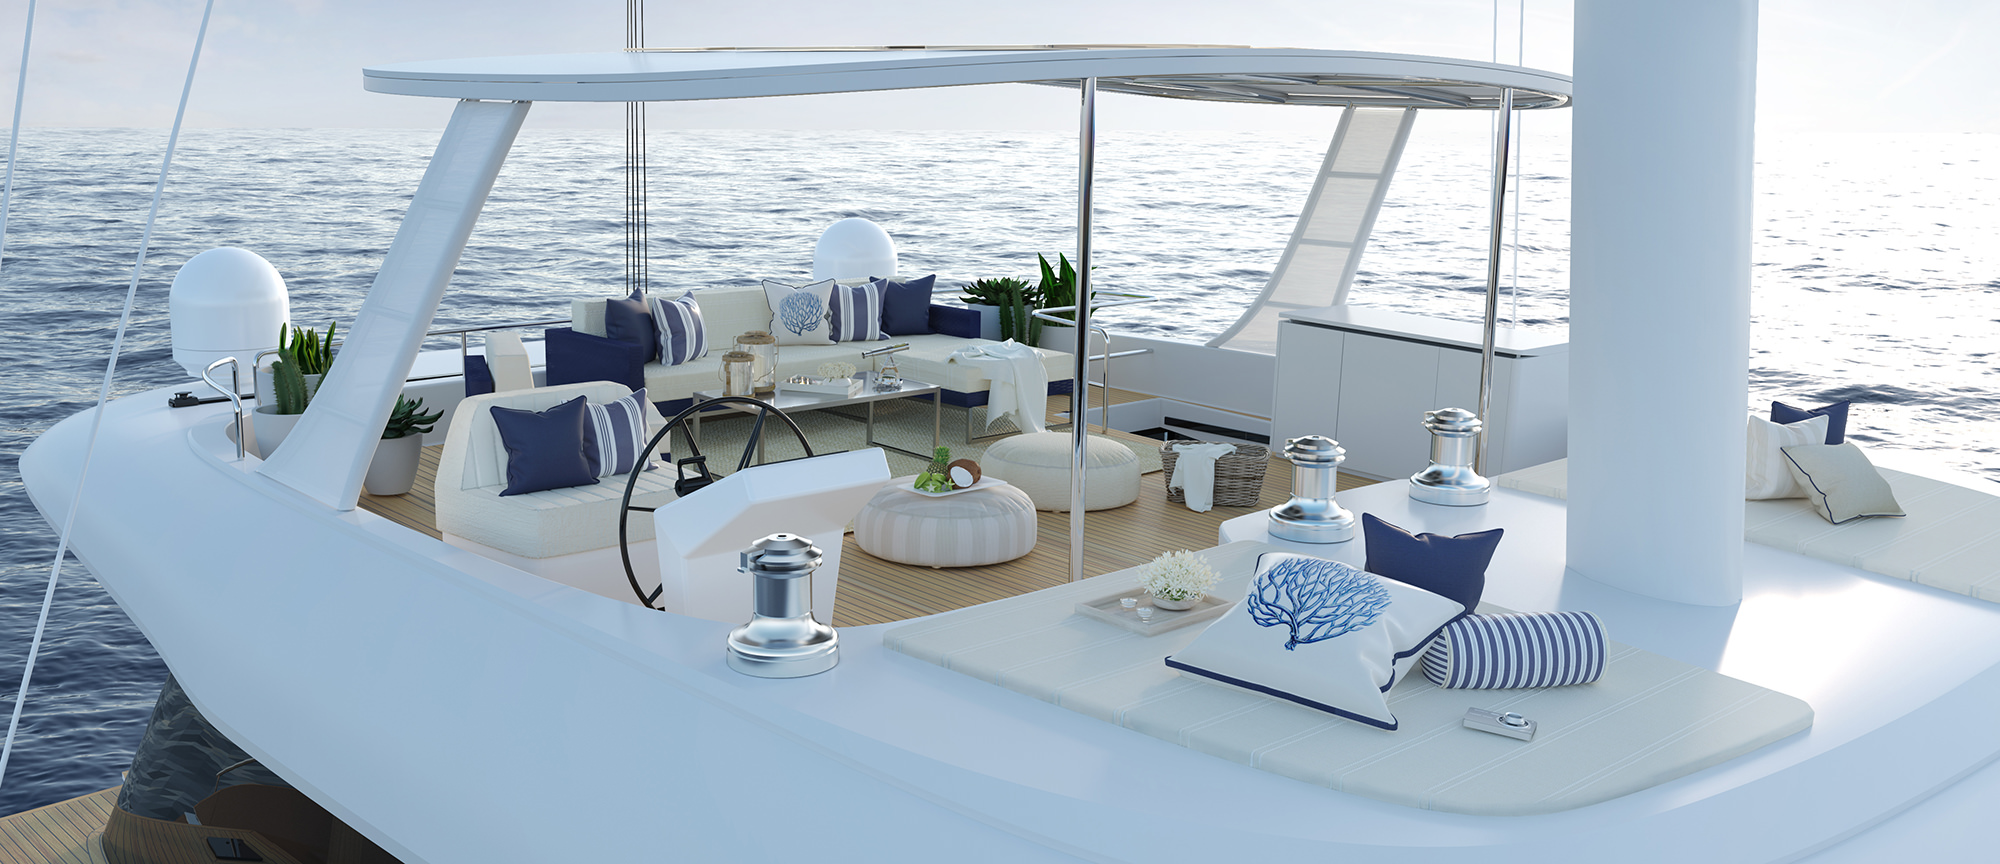 New Sail Catamaran for Sale  Sunreef 60 Deck & Equipment